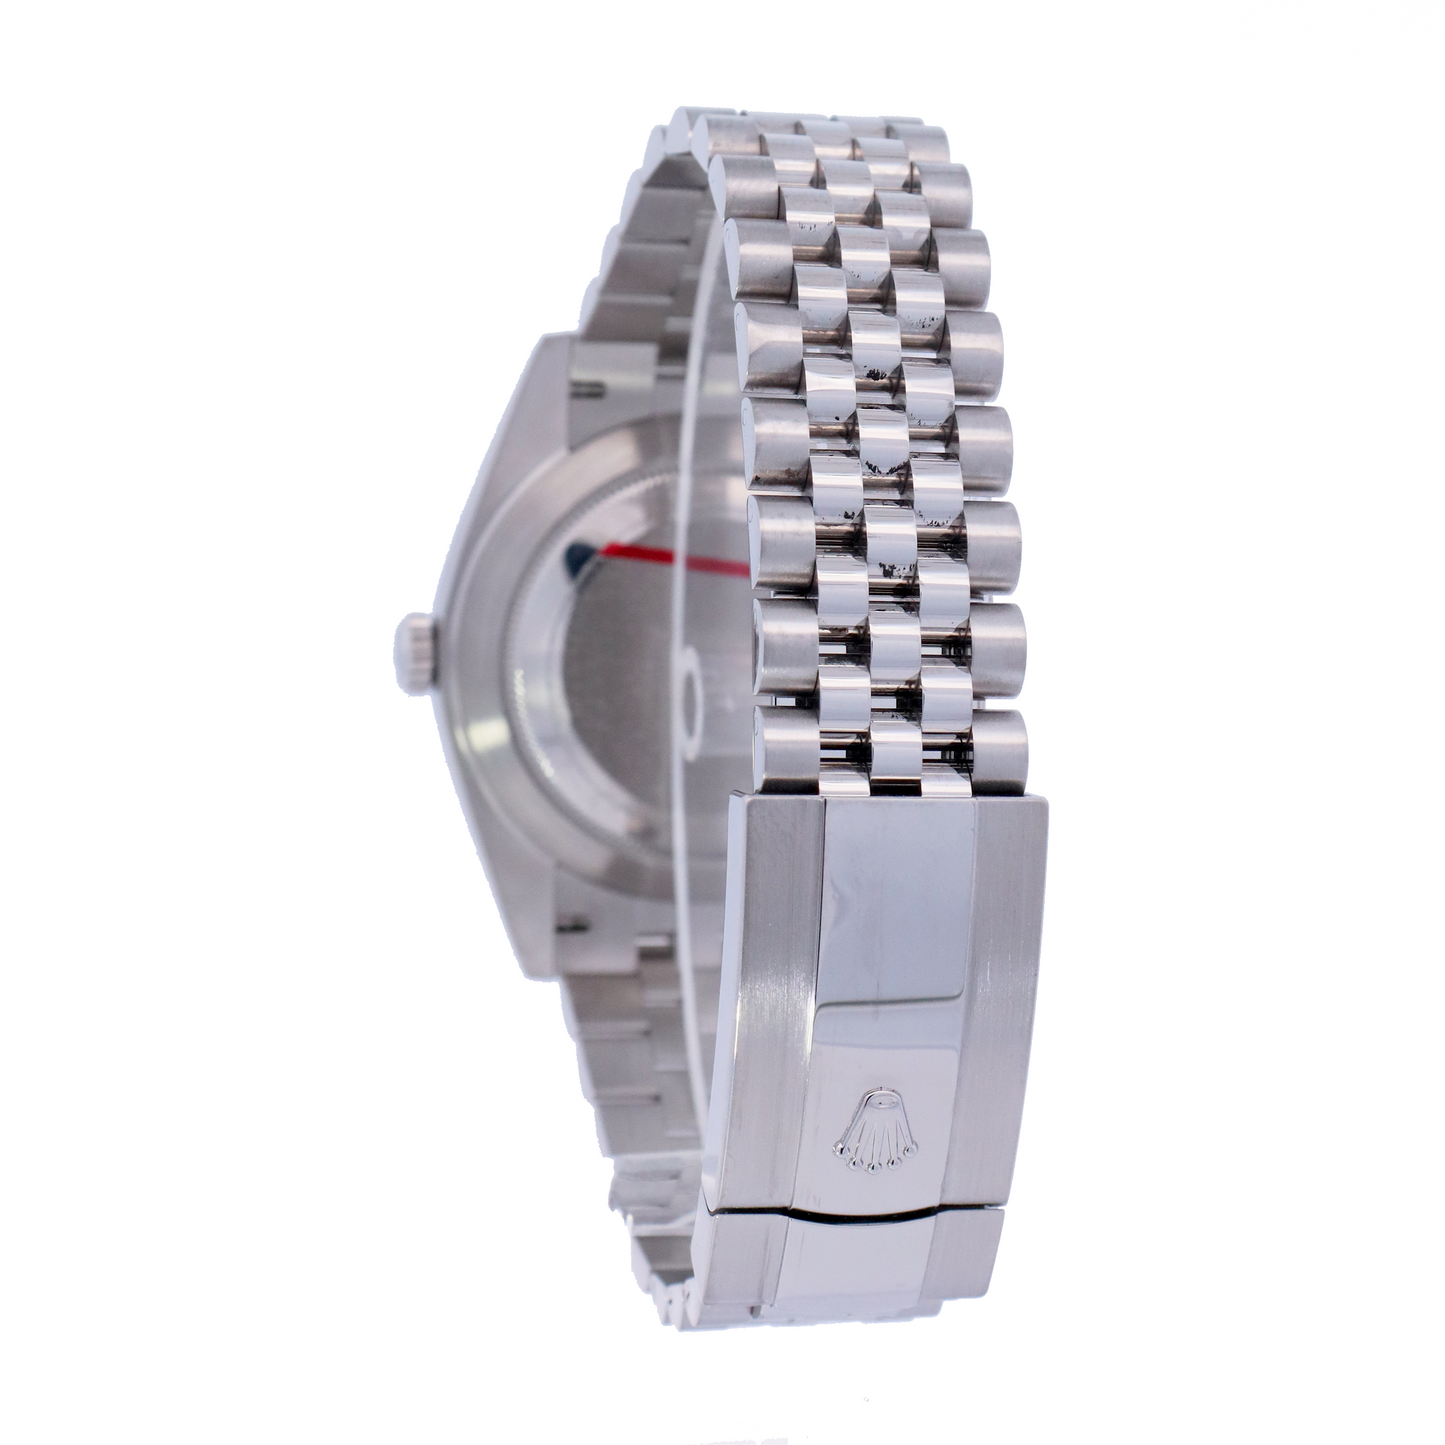 Rolex Datejust Stainless Steel 41mm Blue Roman Dial Watch | Ref# 126334 - Happy Jewelers Fine Jewelry Lifetime Warranty